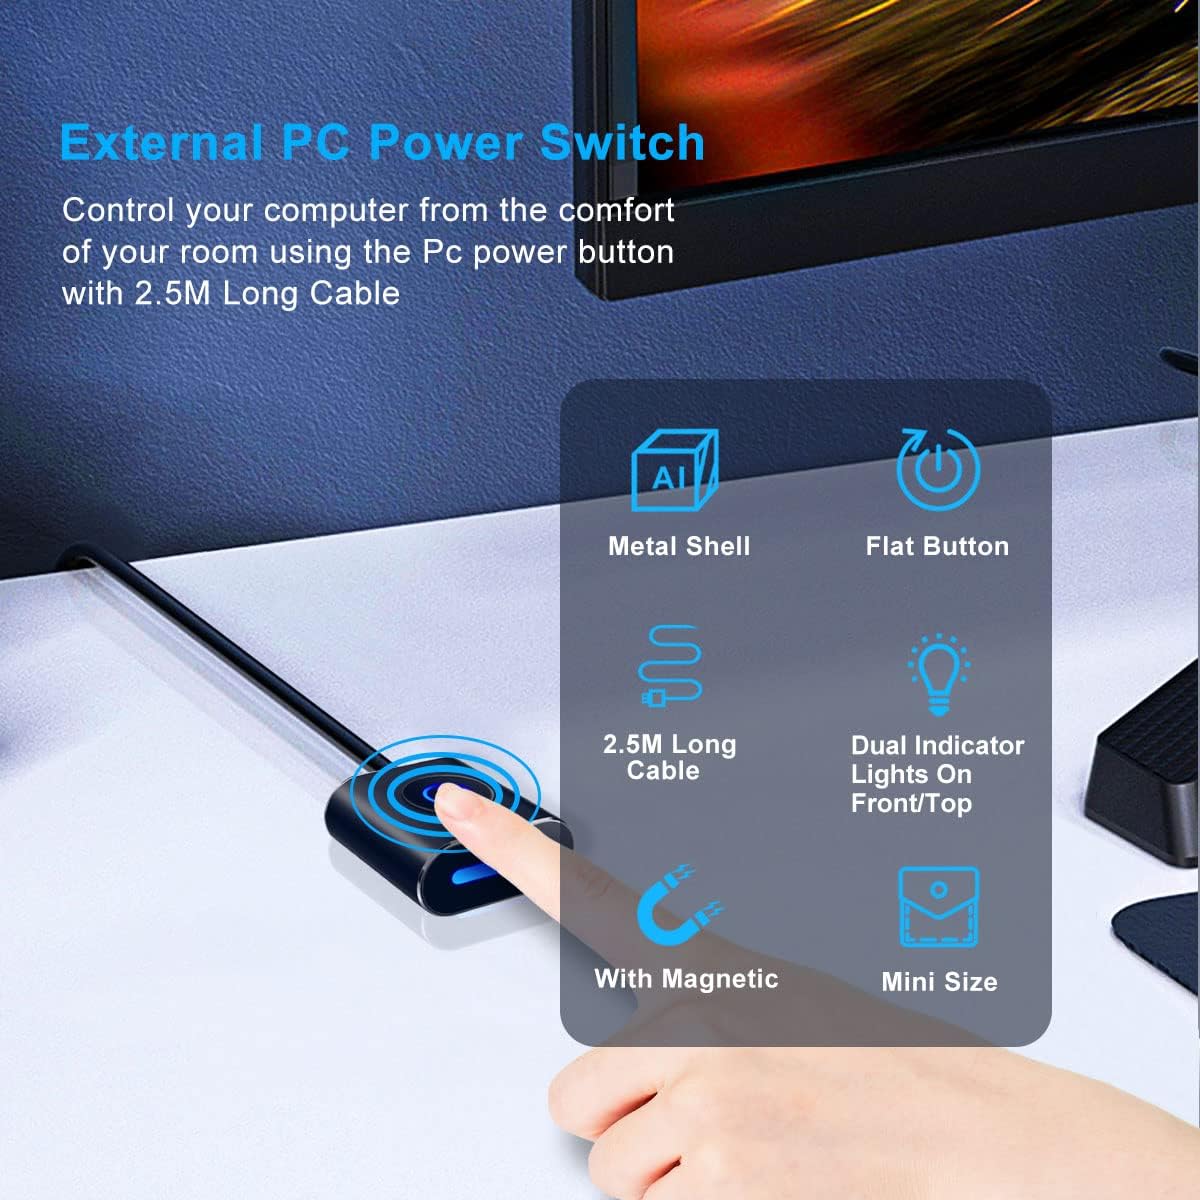 COOIDEA Desktop Computer Power Switch Review